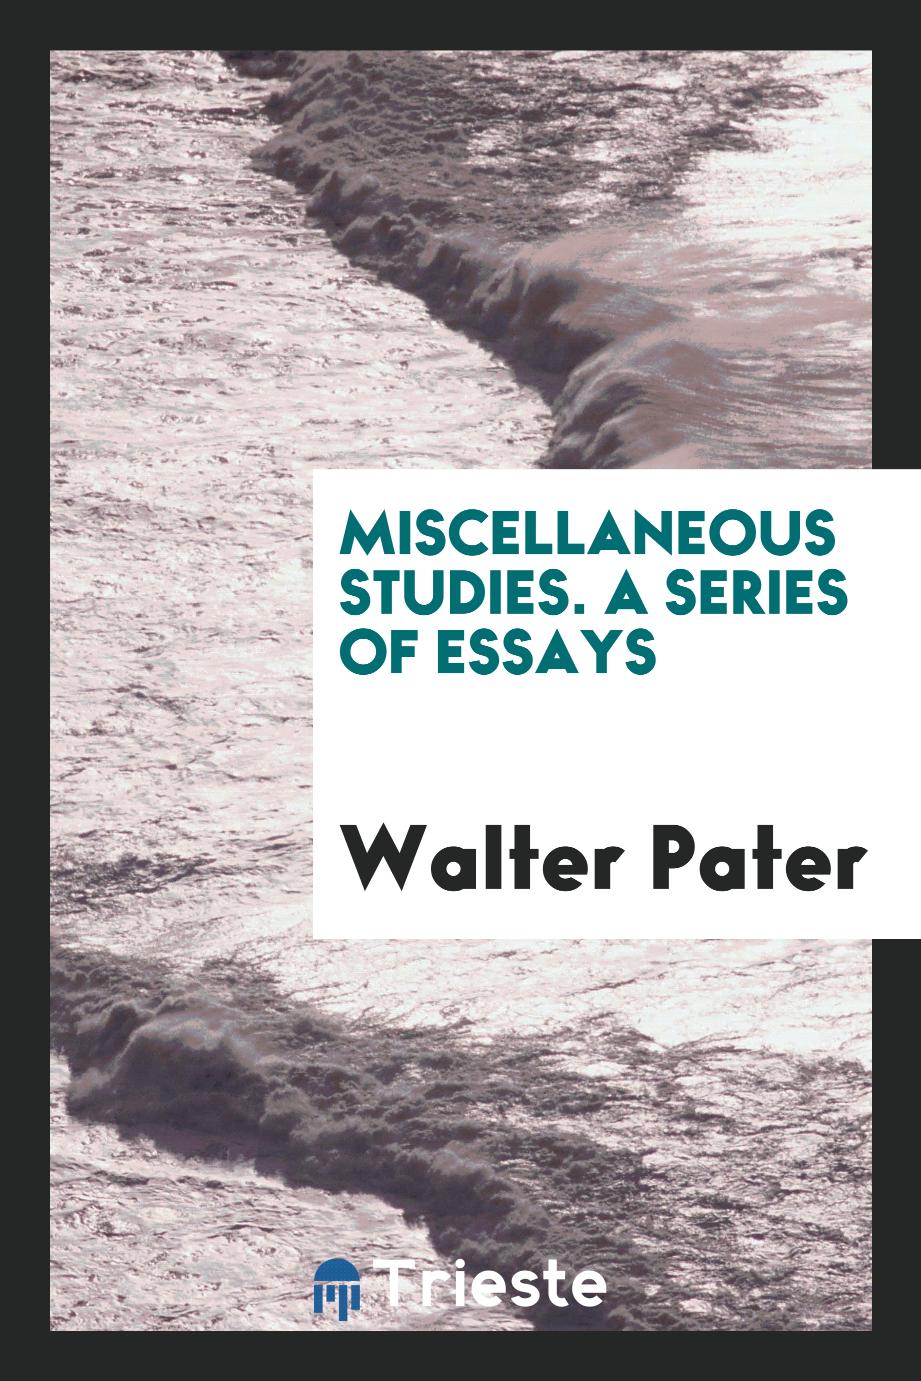 Miscellaneous studies. A series of essays